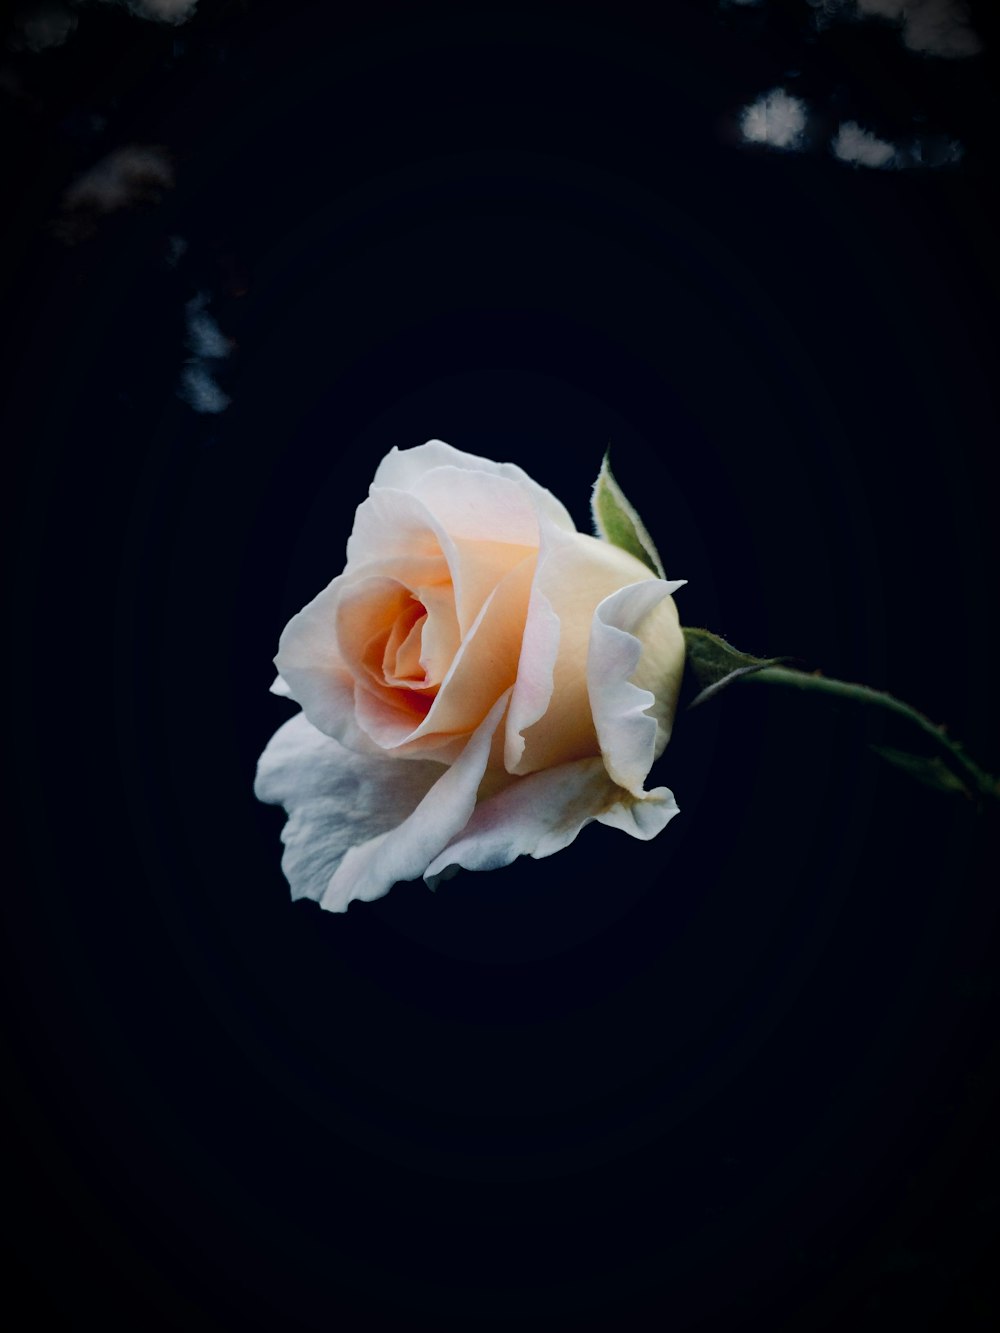 shallow focus photo of white rose